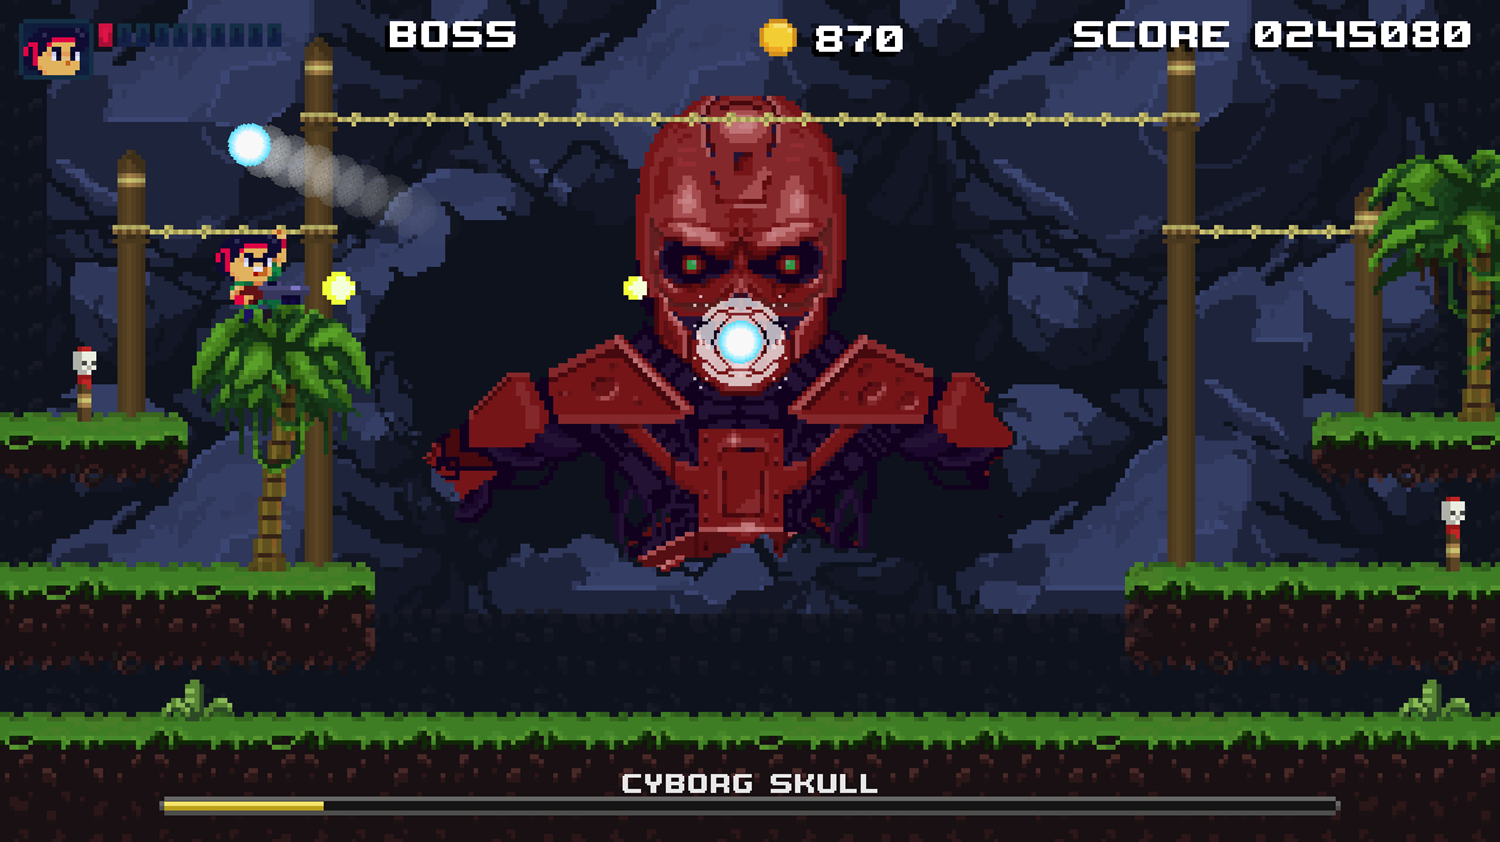 Brave Soldier Invasion of Cyborgs Game Cyborg Skull Blue Attack Screenshot.